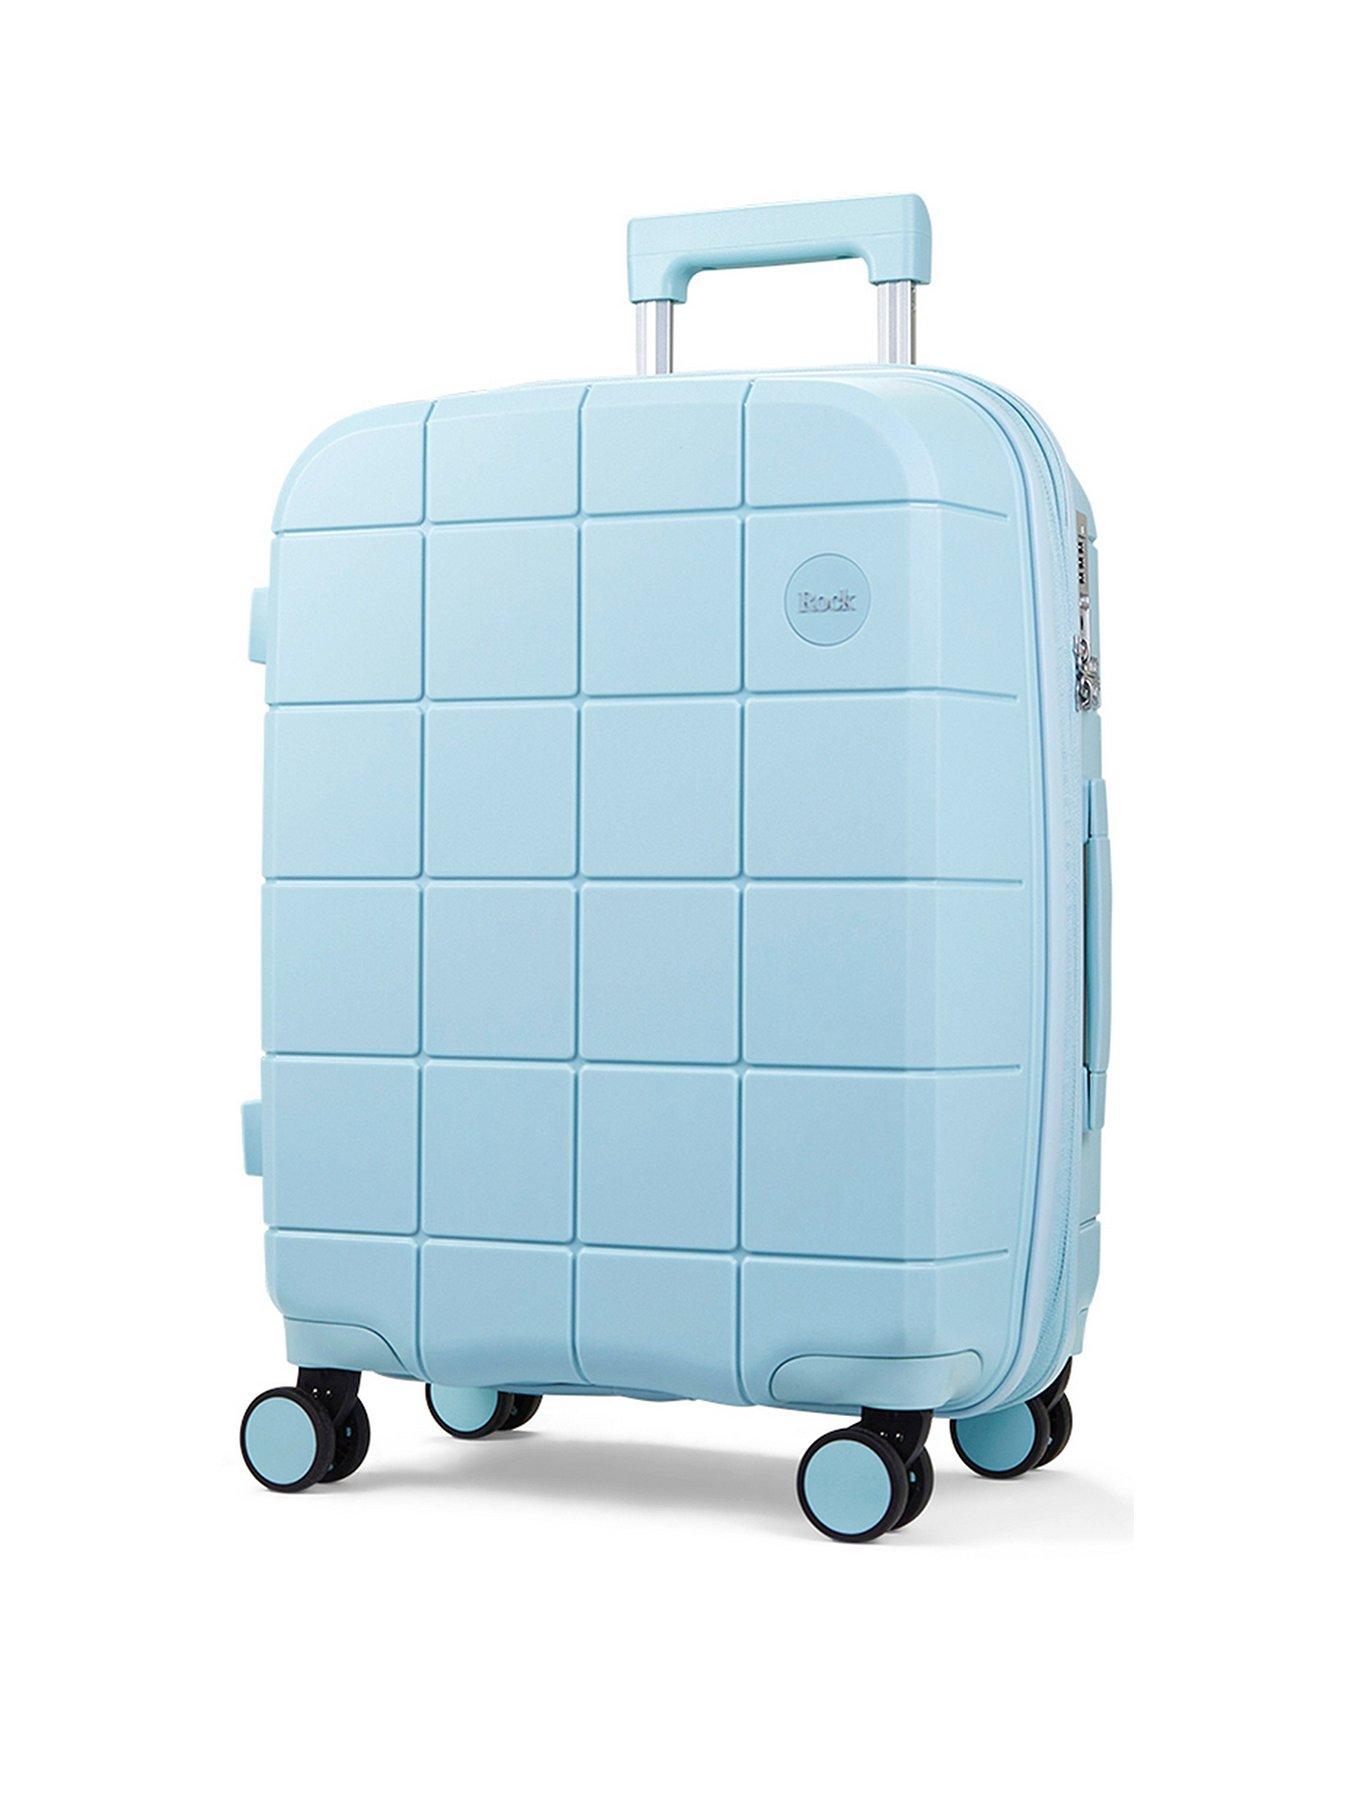 Tripp Chic Sky Blue Large Suitcase - Tripp Ltd